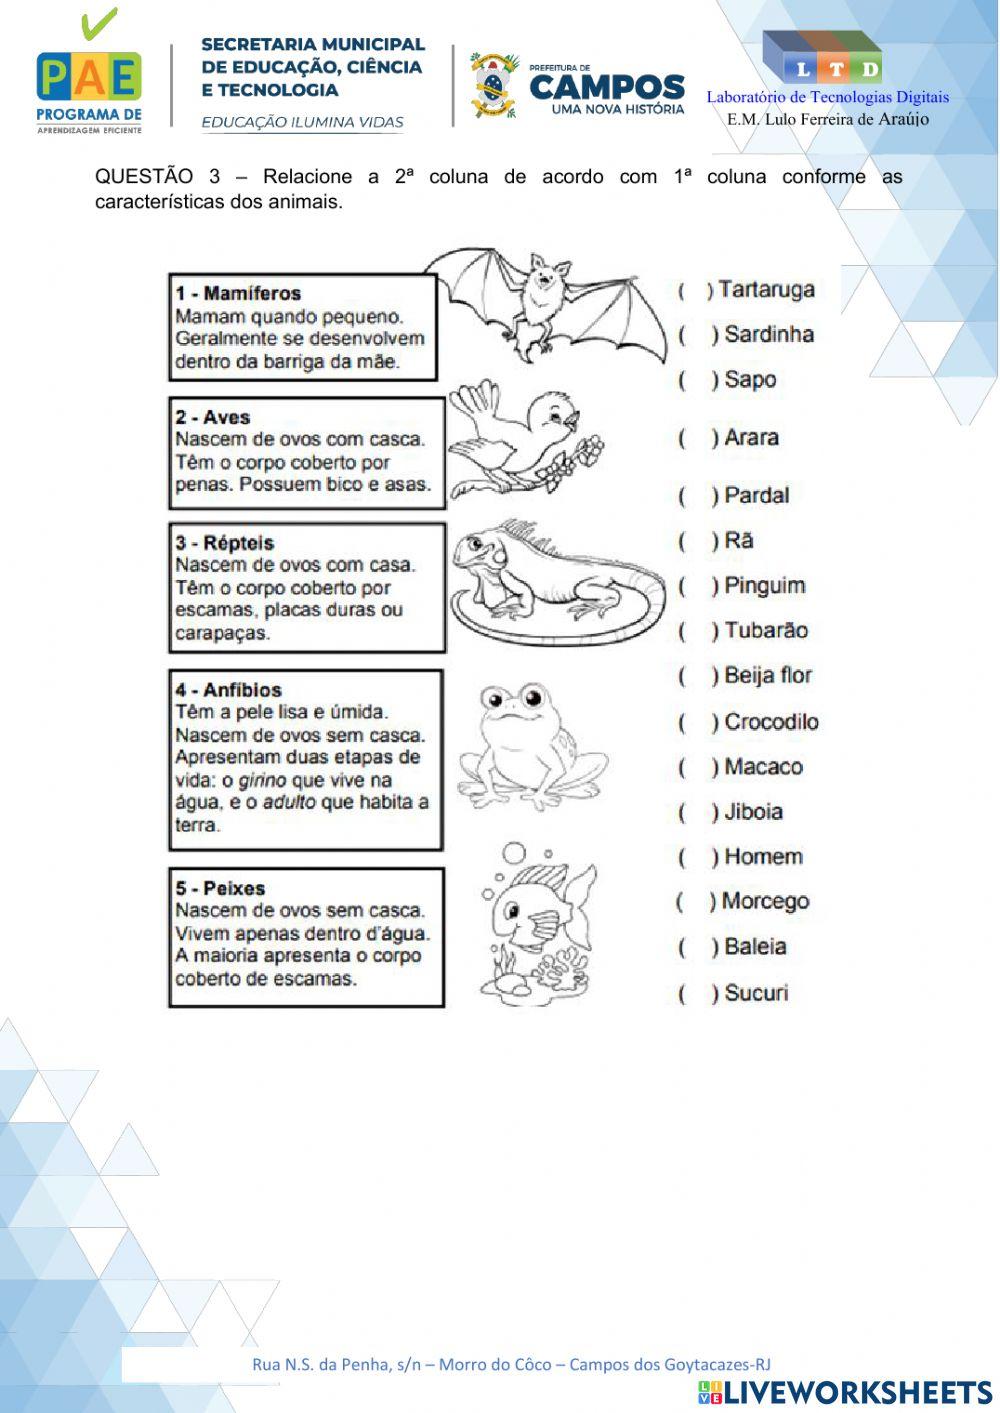 Características dos Animais ll - Reforço.